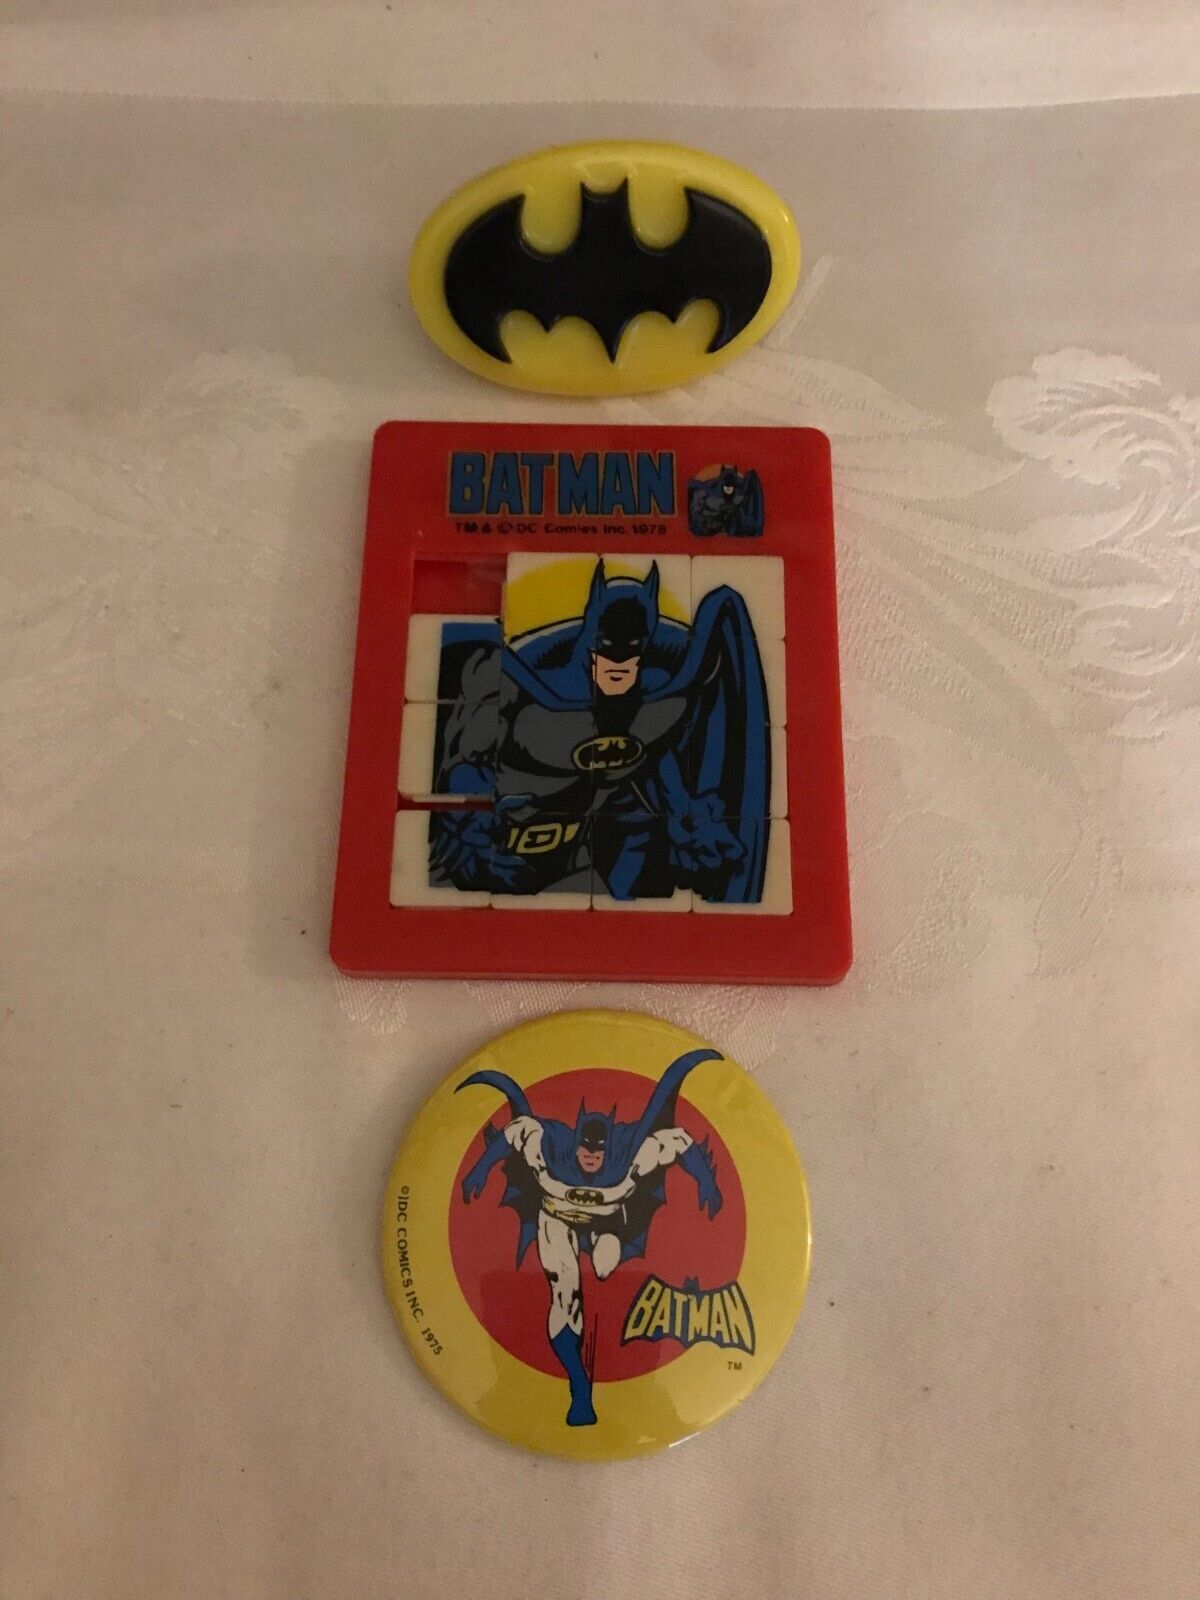 Batman DC Comics Bat Light, Batman Rubic's Cube Puzzle, and a Batman Button